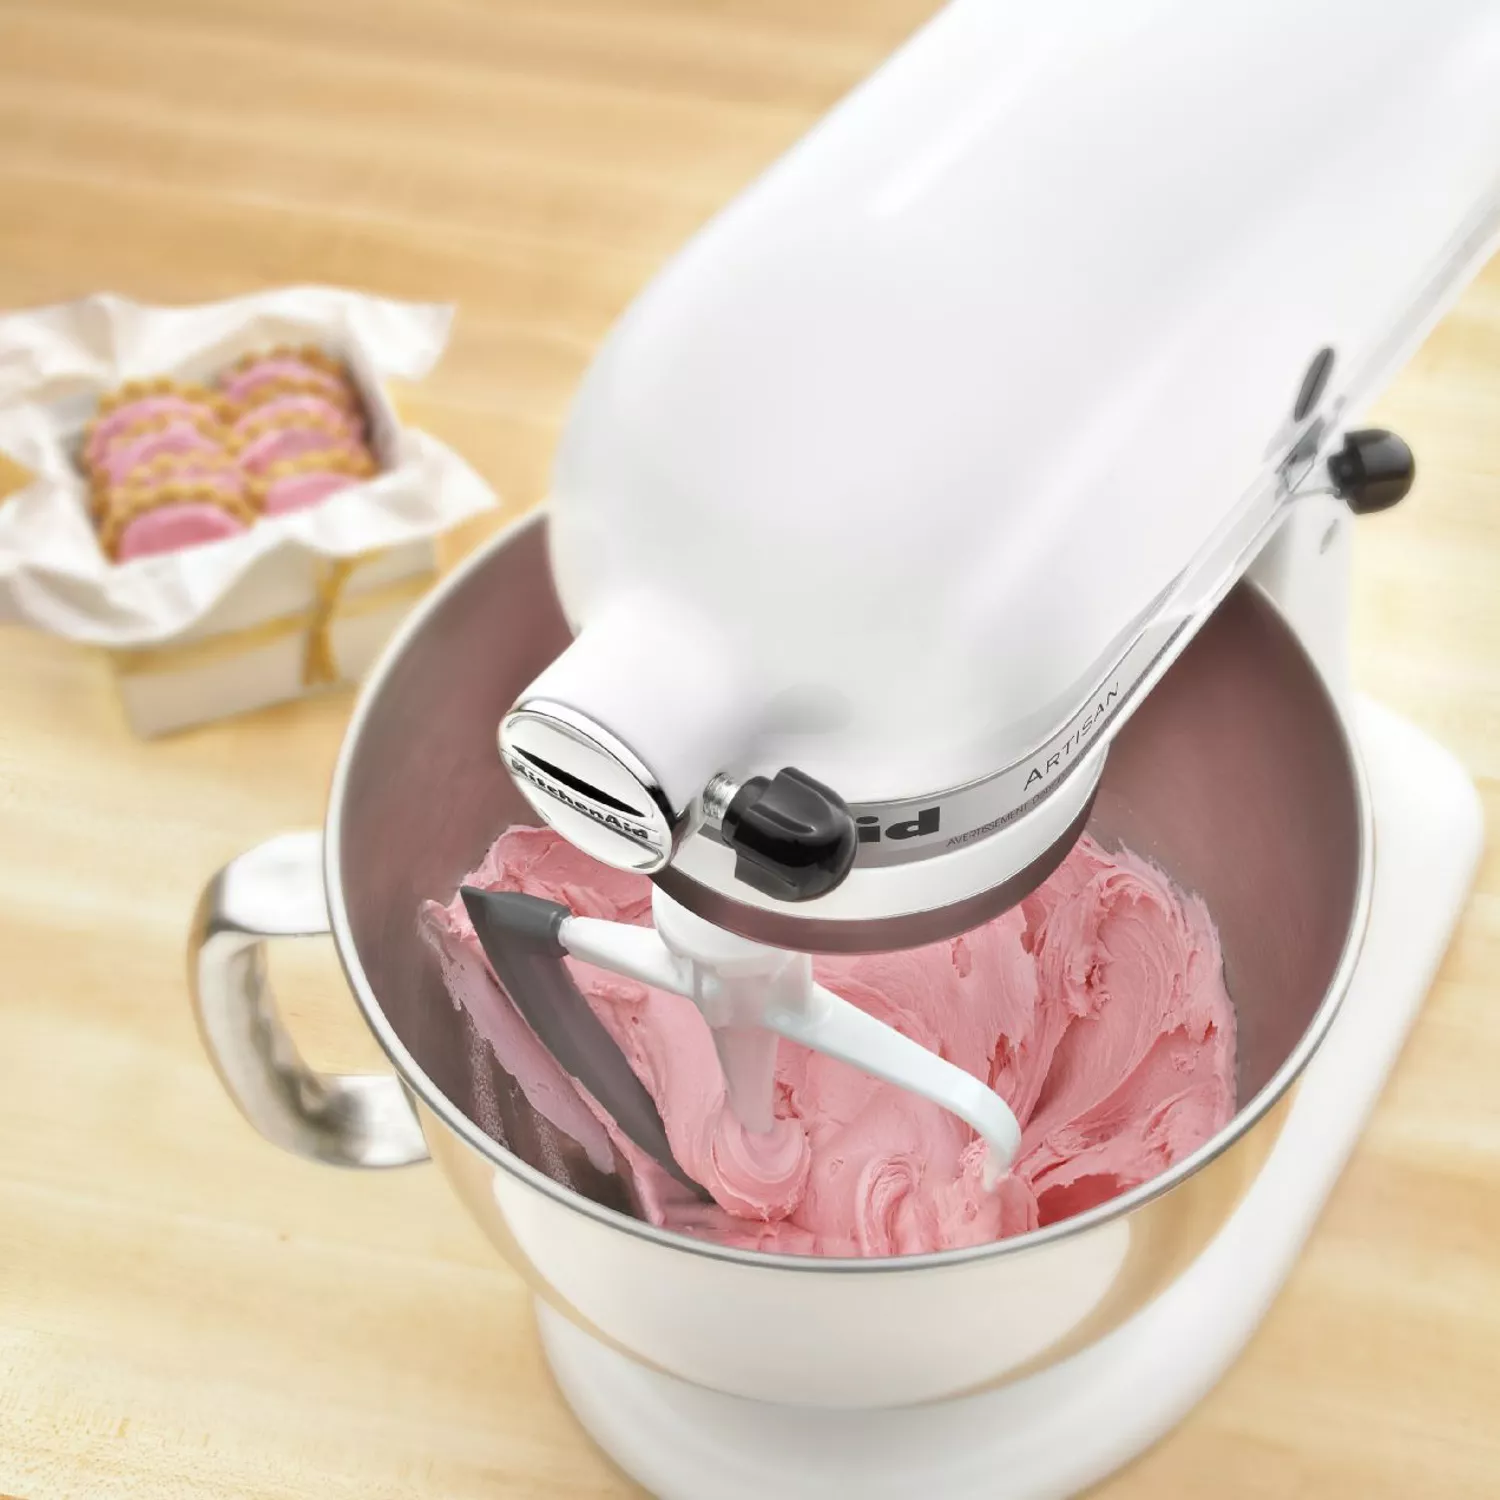 KitchenAid 5-Quart Stand Mixer with Glass Bowl and Flex Edge